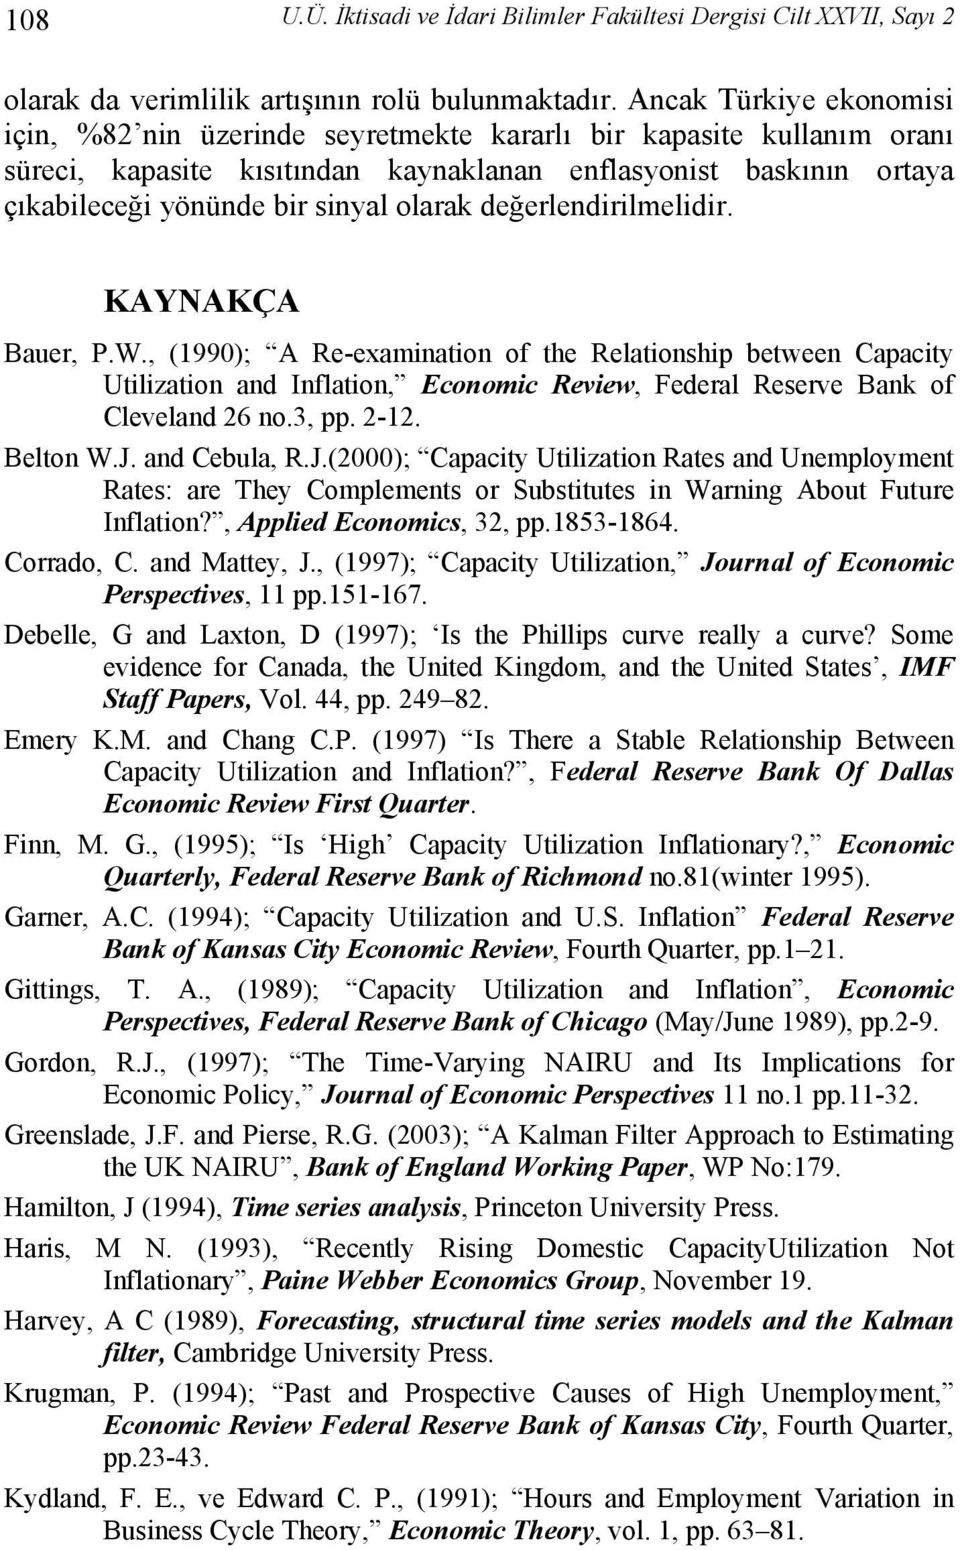 olarak değerlendirilmelidir. KAYNAKÇA Bauer, P.W., (990); A Re-examination of the Relationship between Capacity Utilization and Inflation, Economic Review, Federal Reserve Bank of Cleveland 26 no.